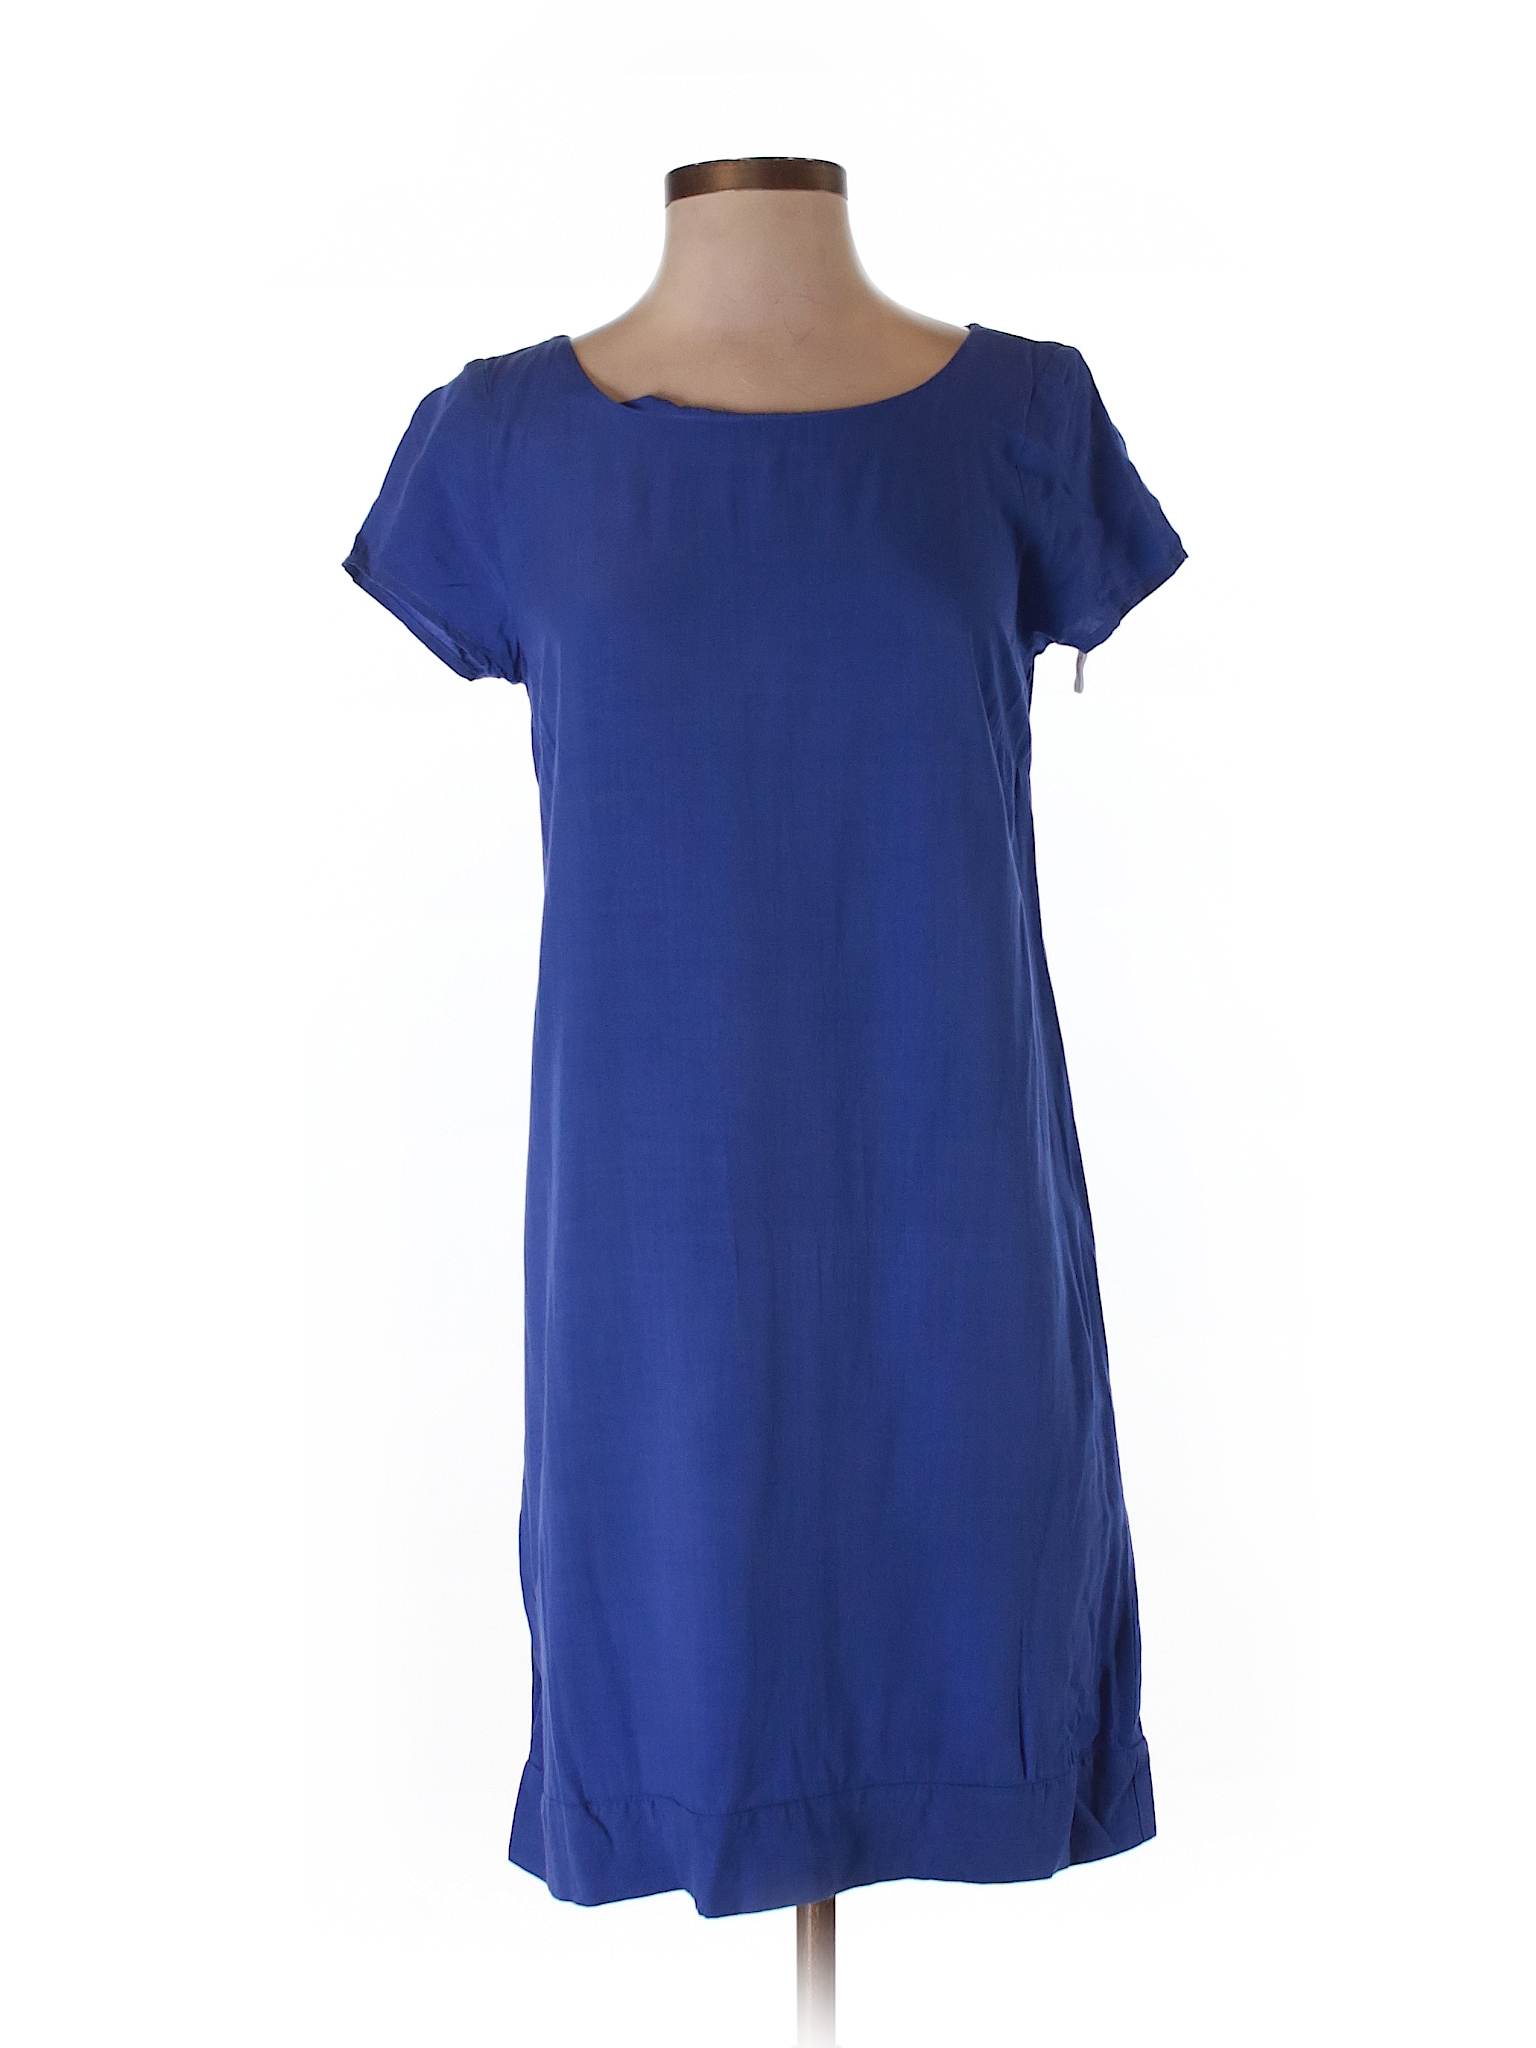 Splendid 100% Rayon Solid Dark Blue Casual Dress Size S - 74% off | thredUP